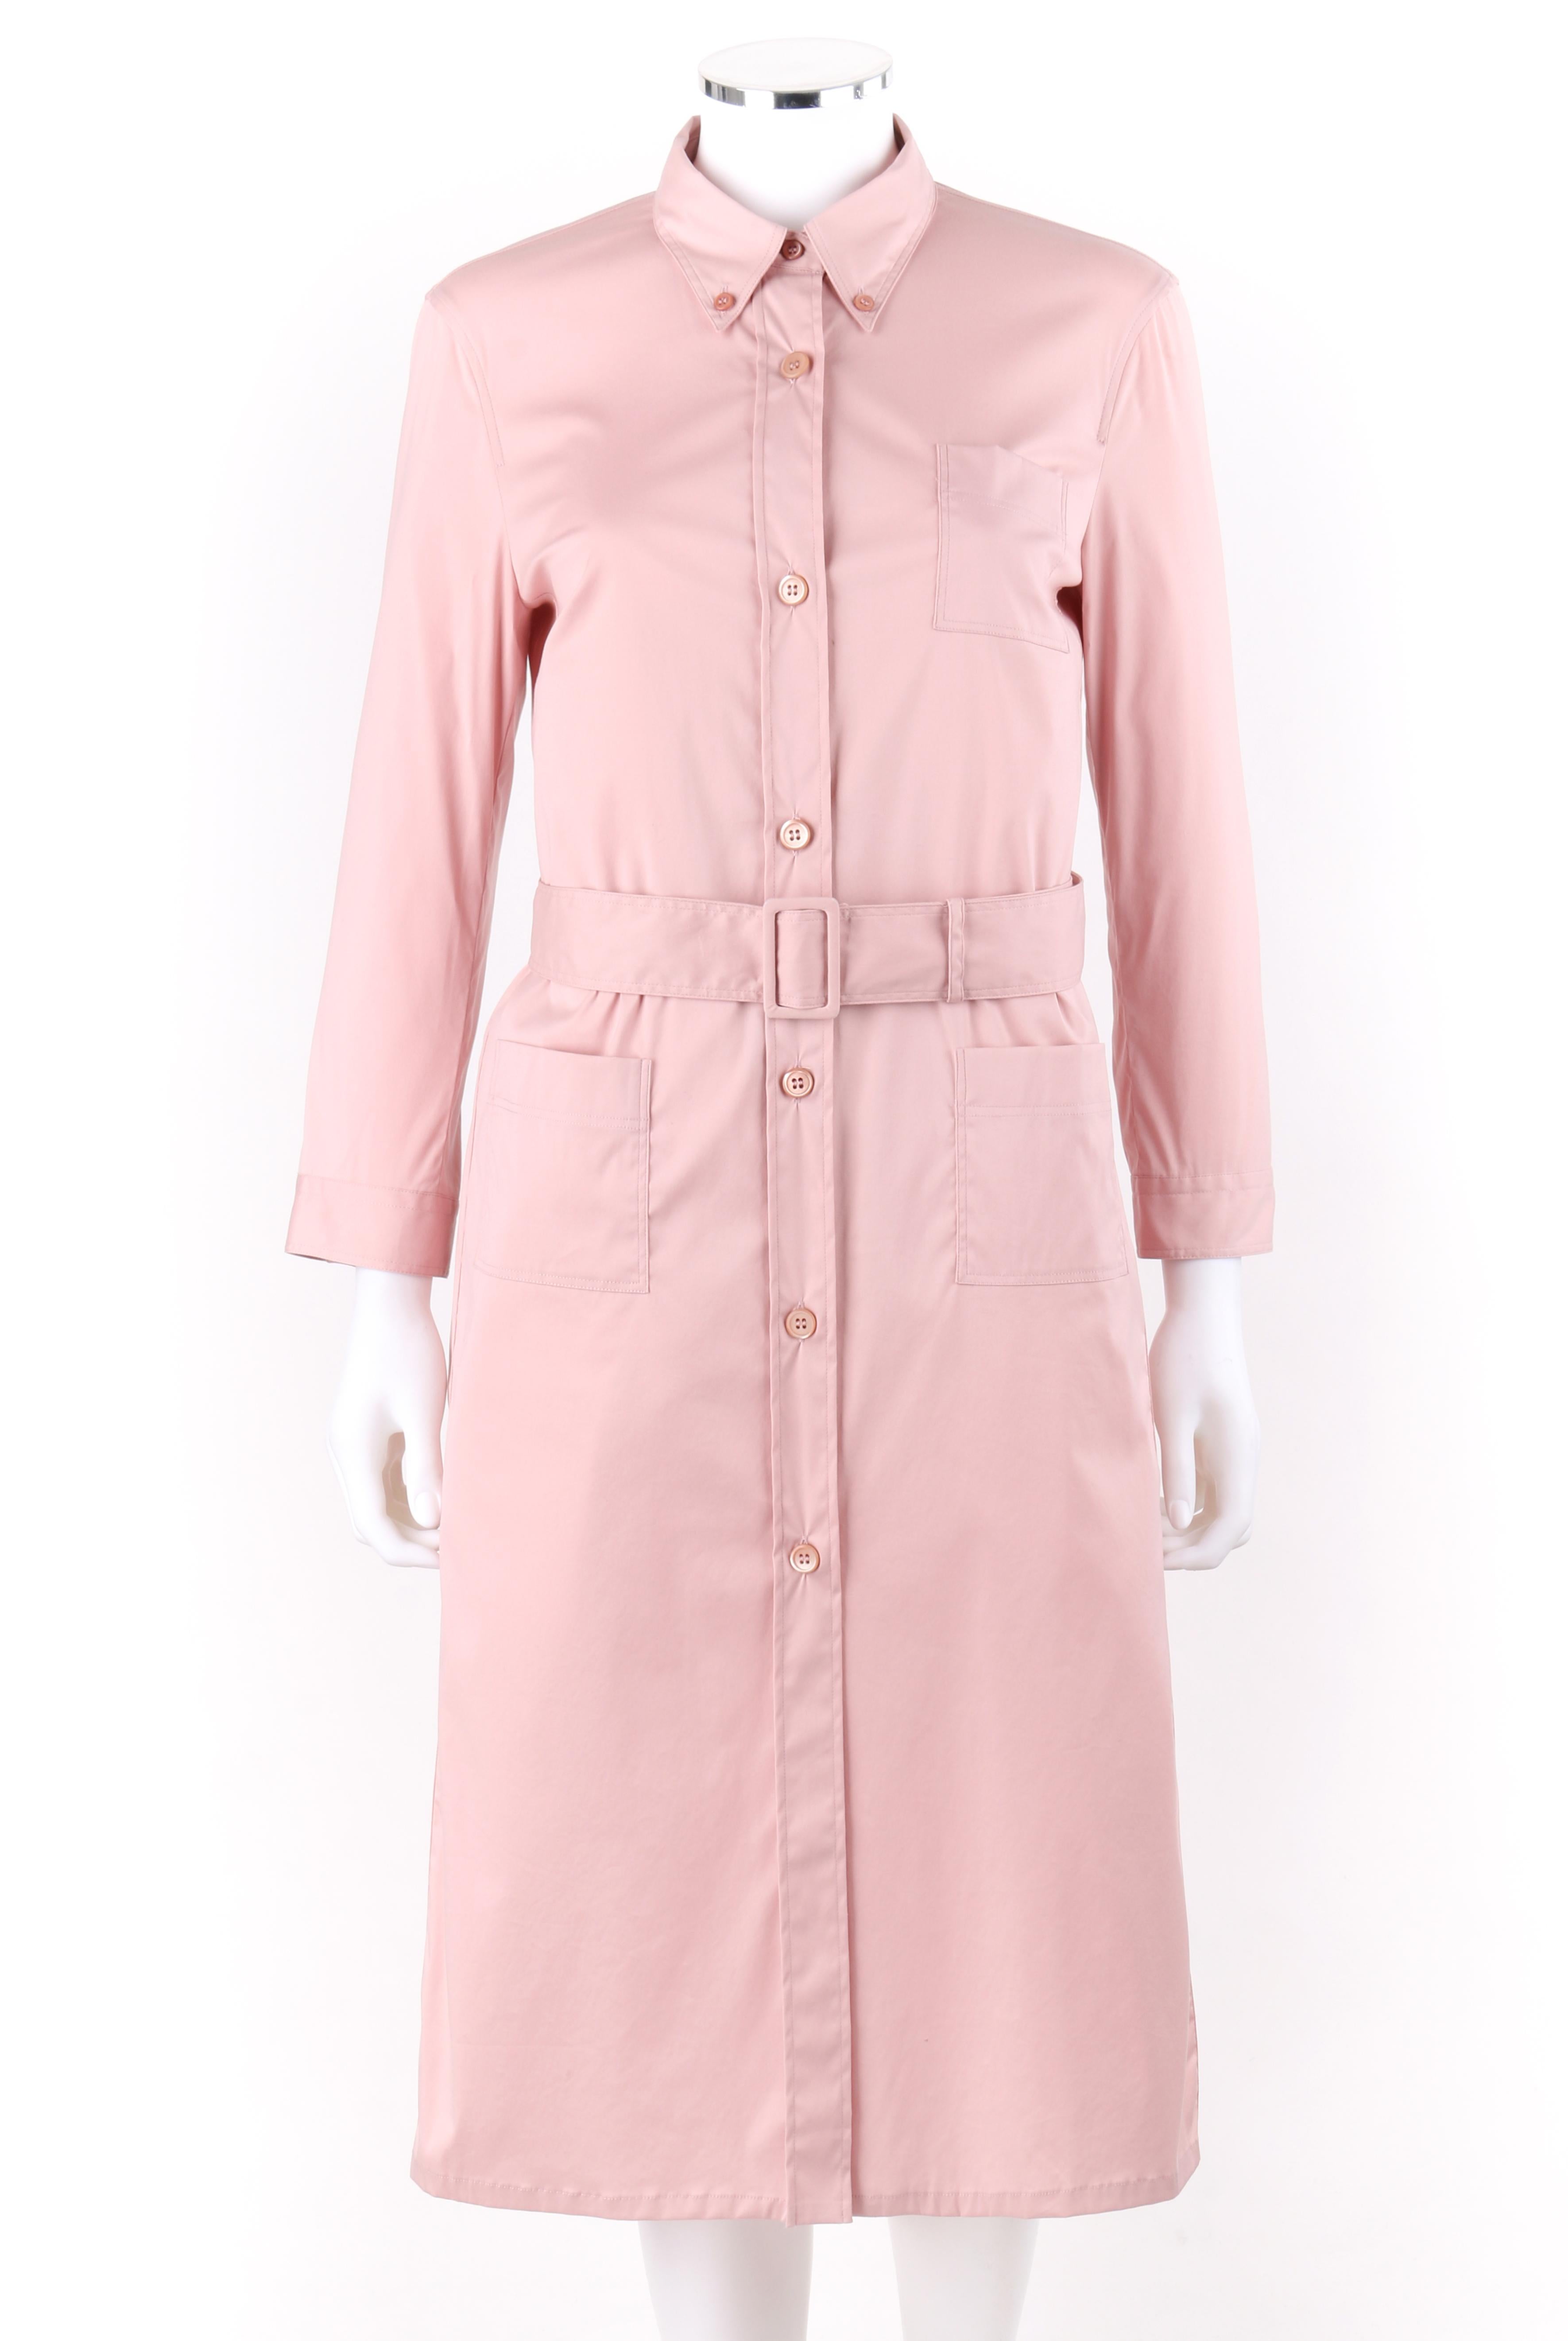 PRADA c.2000’s Pink Button Down Patch Pocket Belted Long Sleeve Shirt Dress

Brand / Manufacturer: Prada
Circa: 2000’s
Designer: Miuccia Prada 
Style: Shirtdress
Color(s): Pink
Lined: No
Marked Fabric Content: “72% Cotton, 23% polyamide, 5%